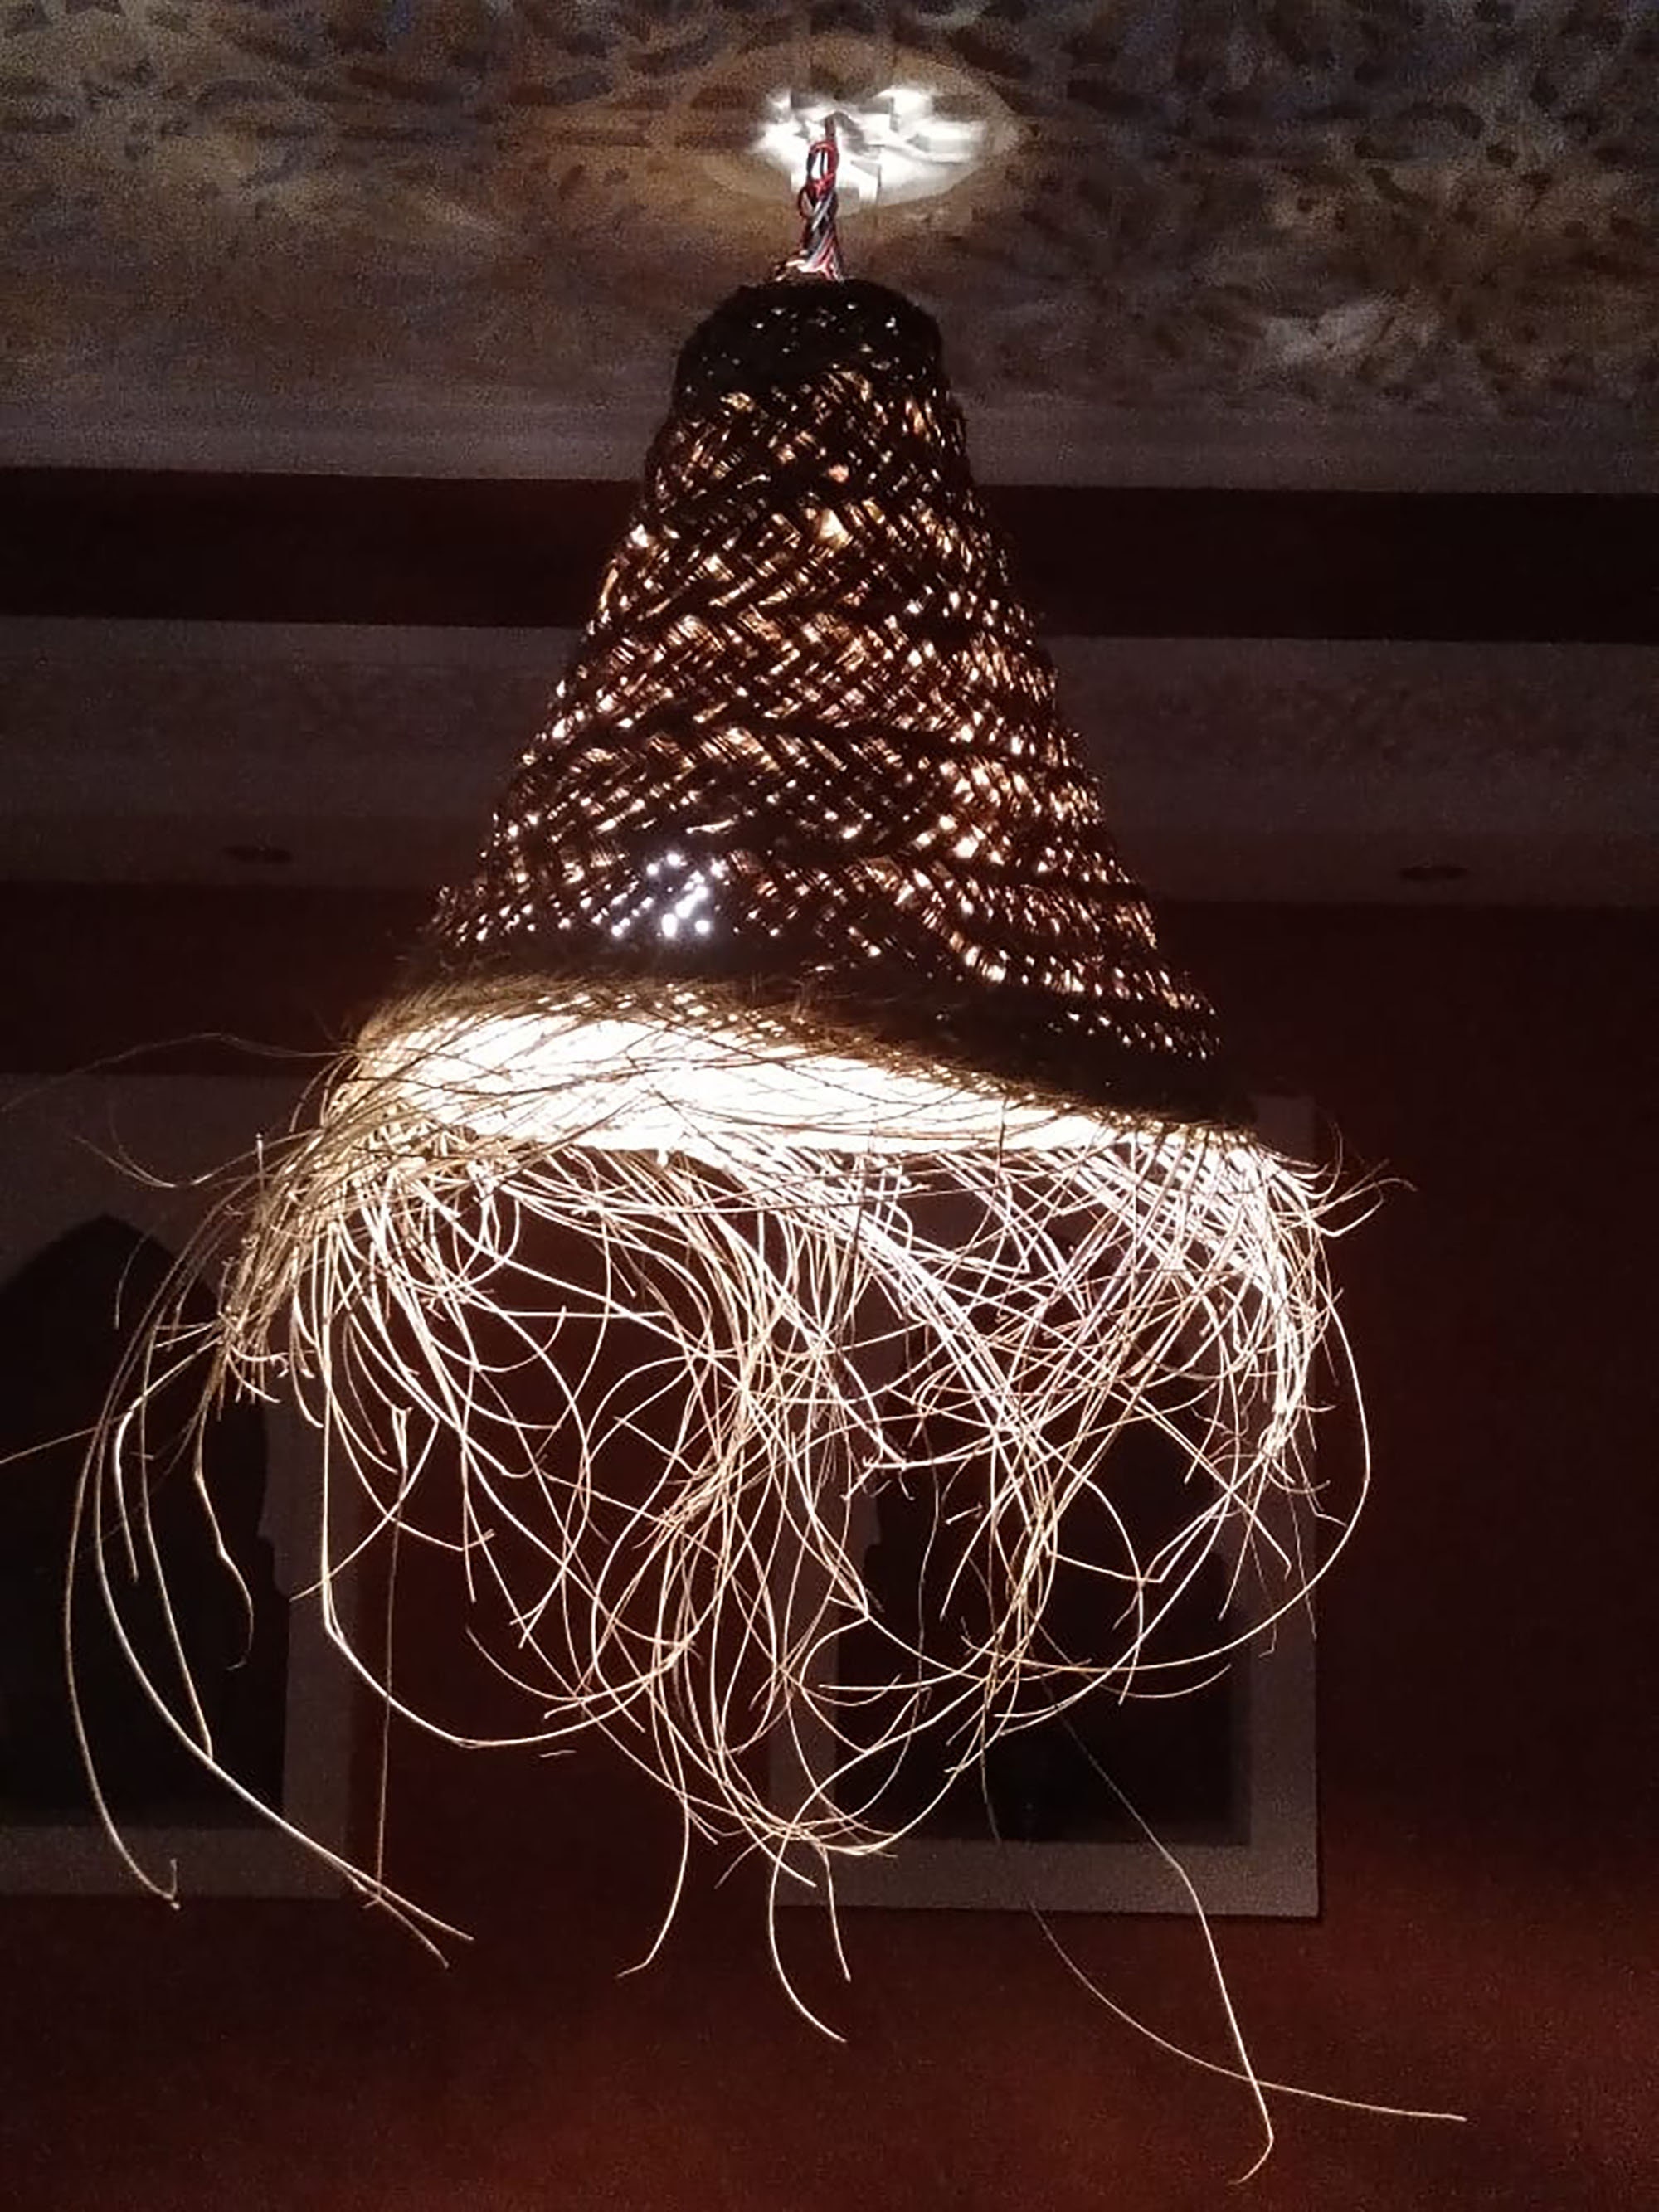 Pendant lamp Big straw chandelier woven rattan lamp boho | Etsy